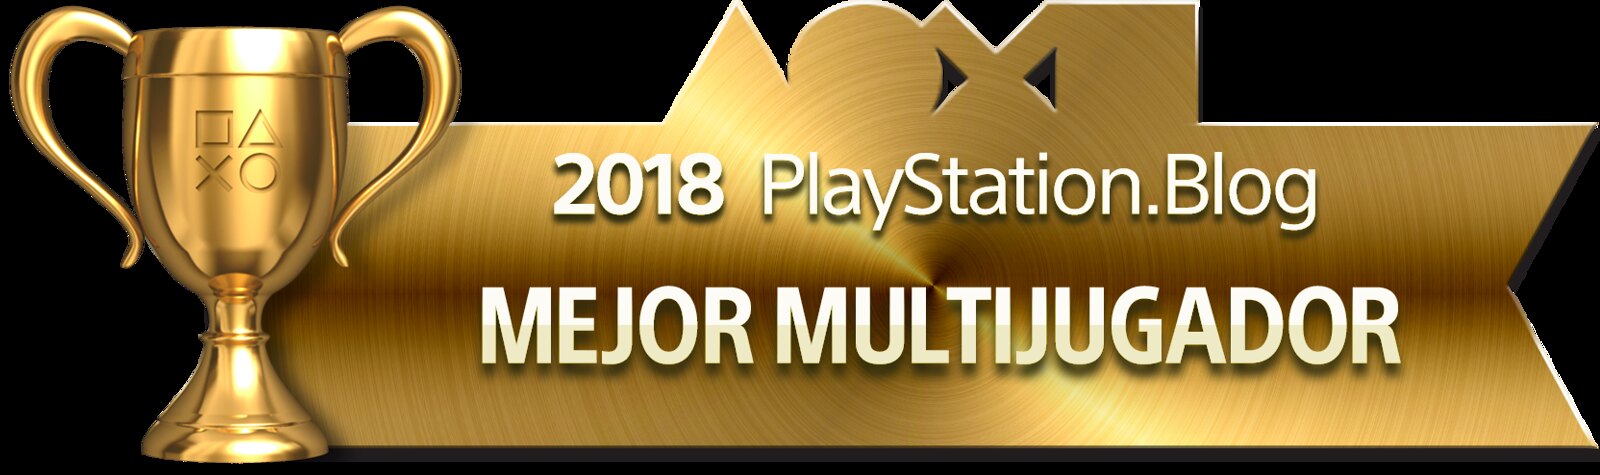 Best Multiplayer - Gold